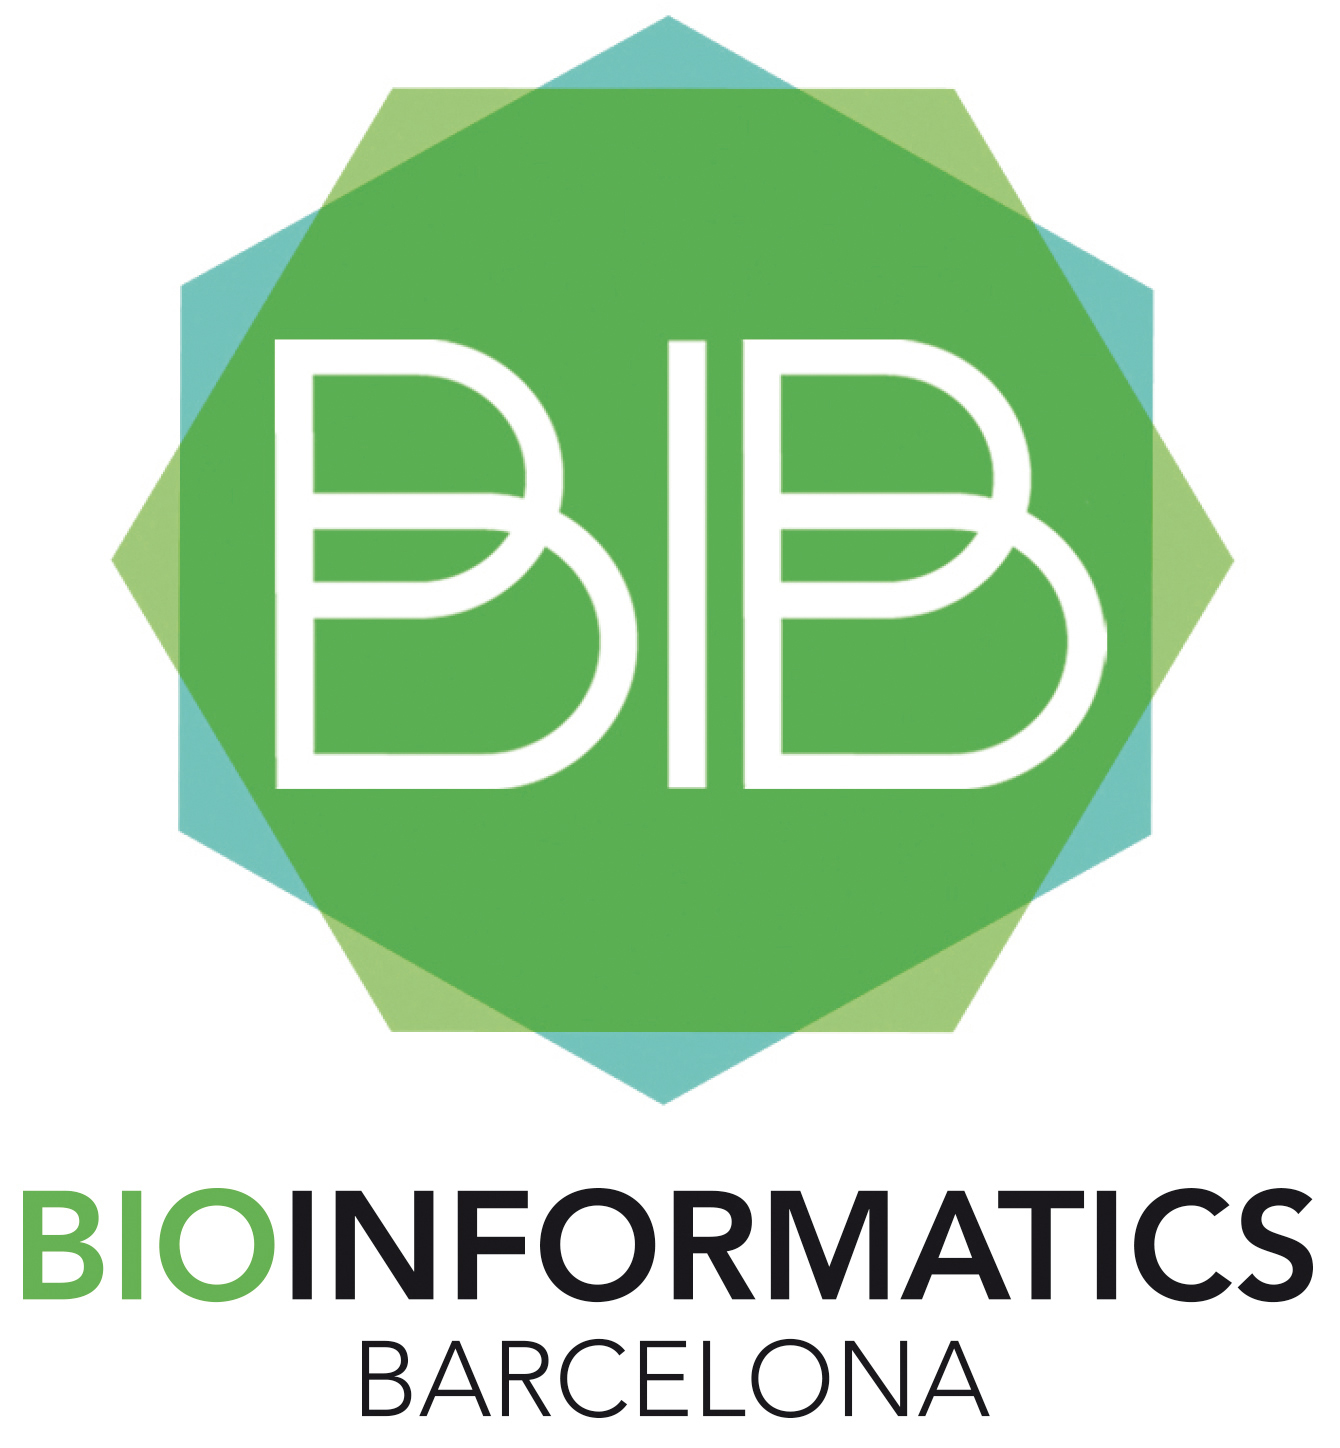 Bioinformatics Barcelona